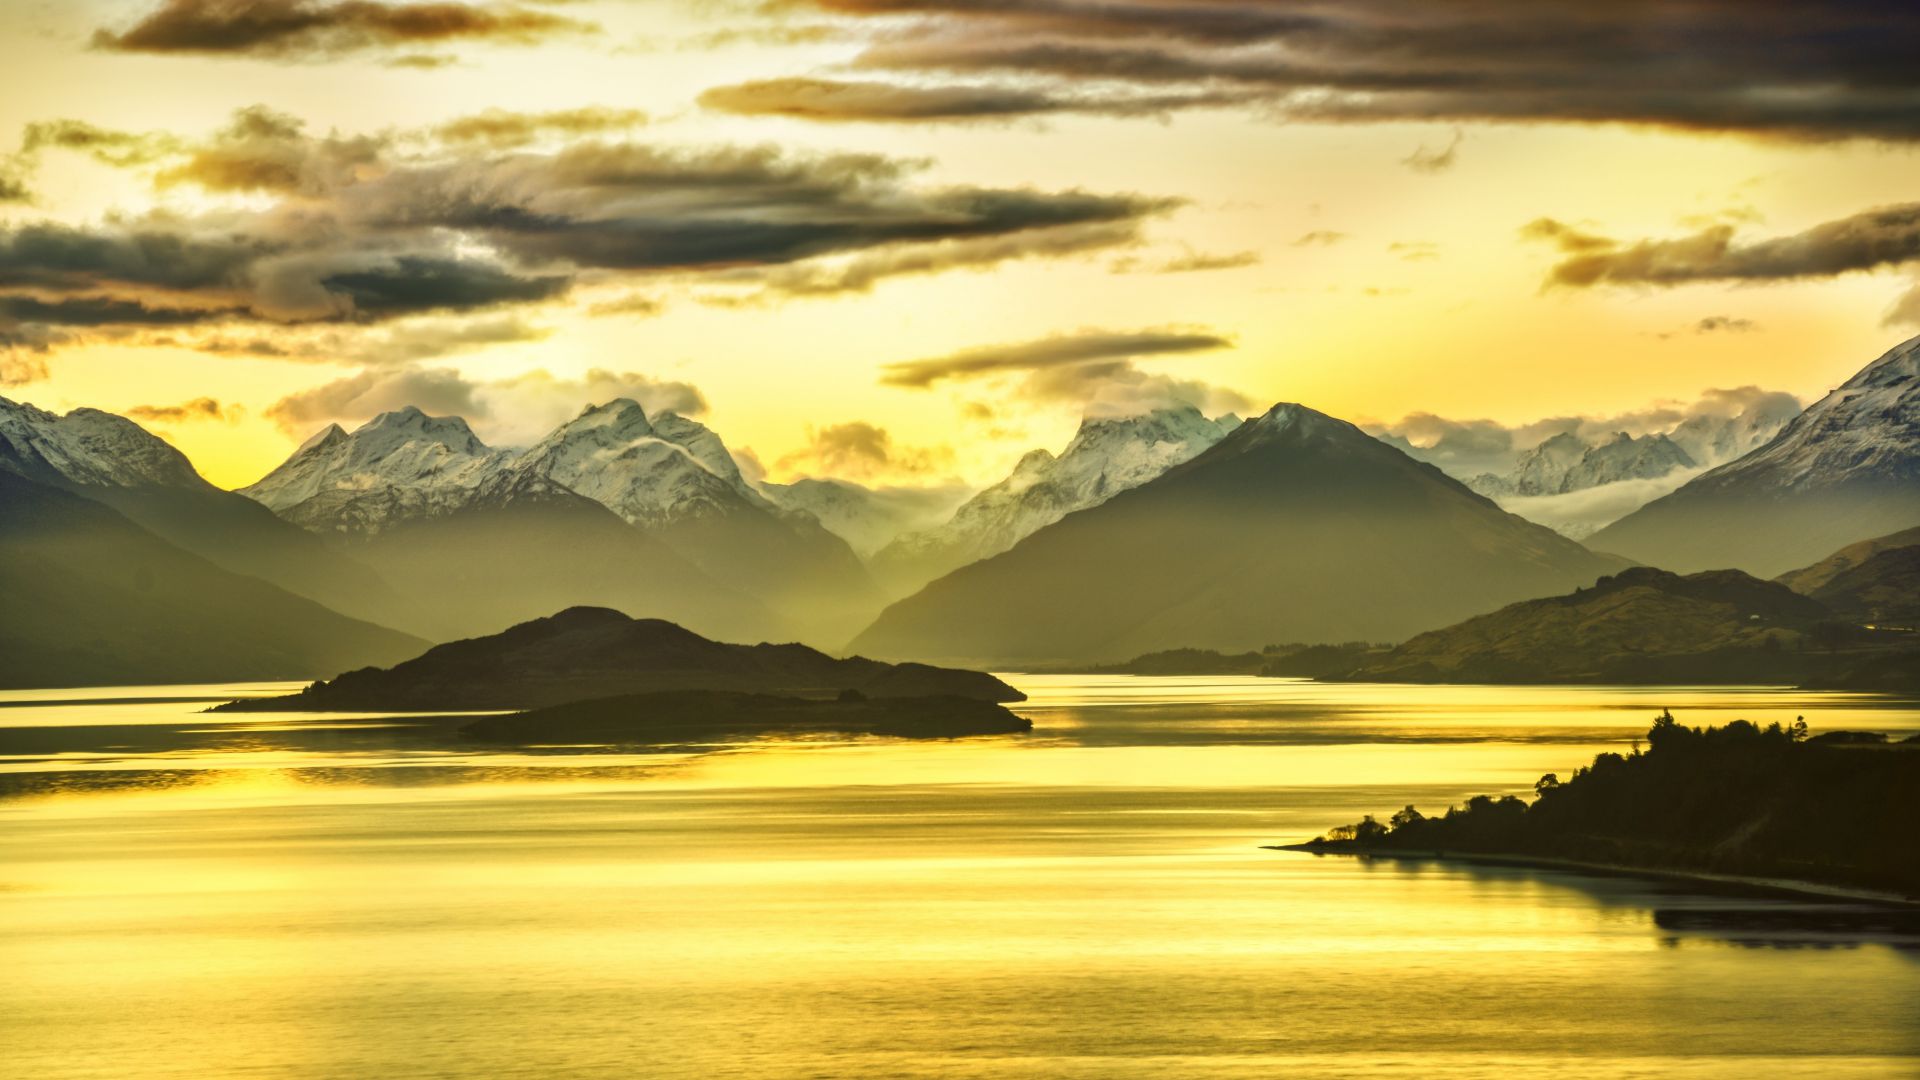 Новая Зеландия, 5k, 4k, Горы, озеро, закат, New Zealand, 5k, 4k wallpaper, Mountains, lake, sunset (horizontal)